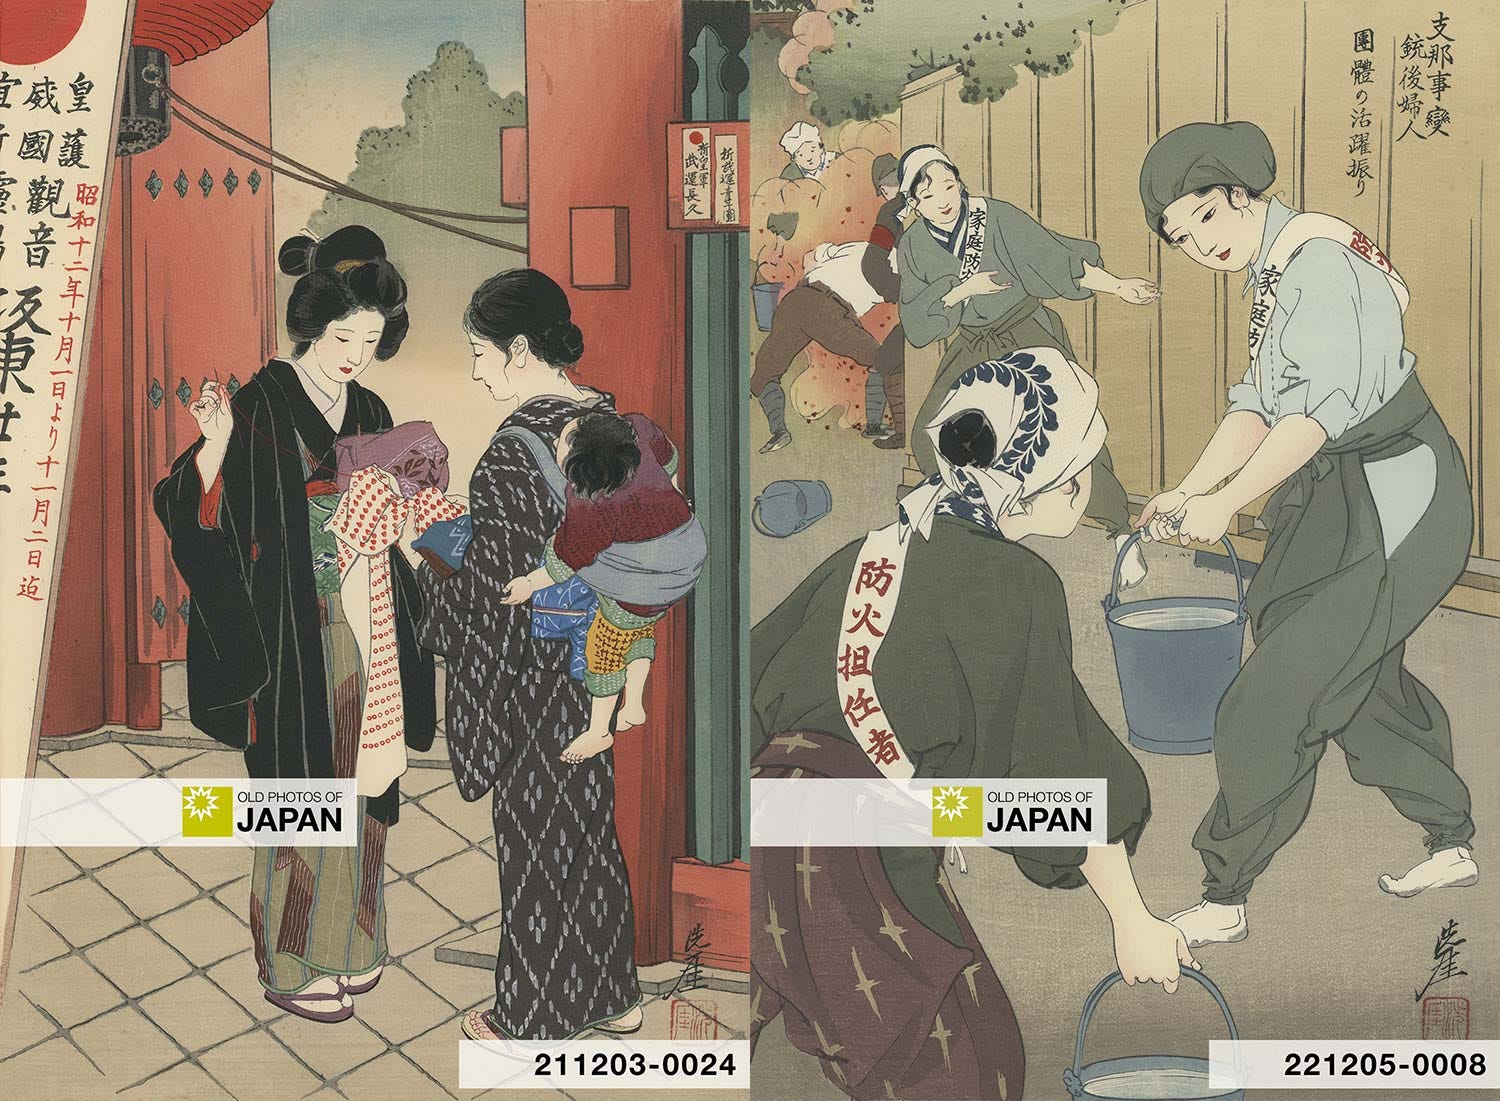 War-related ukiyoe woodblock prints by Sengai Igawa